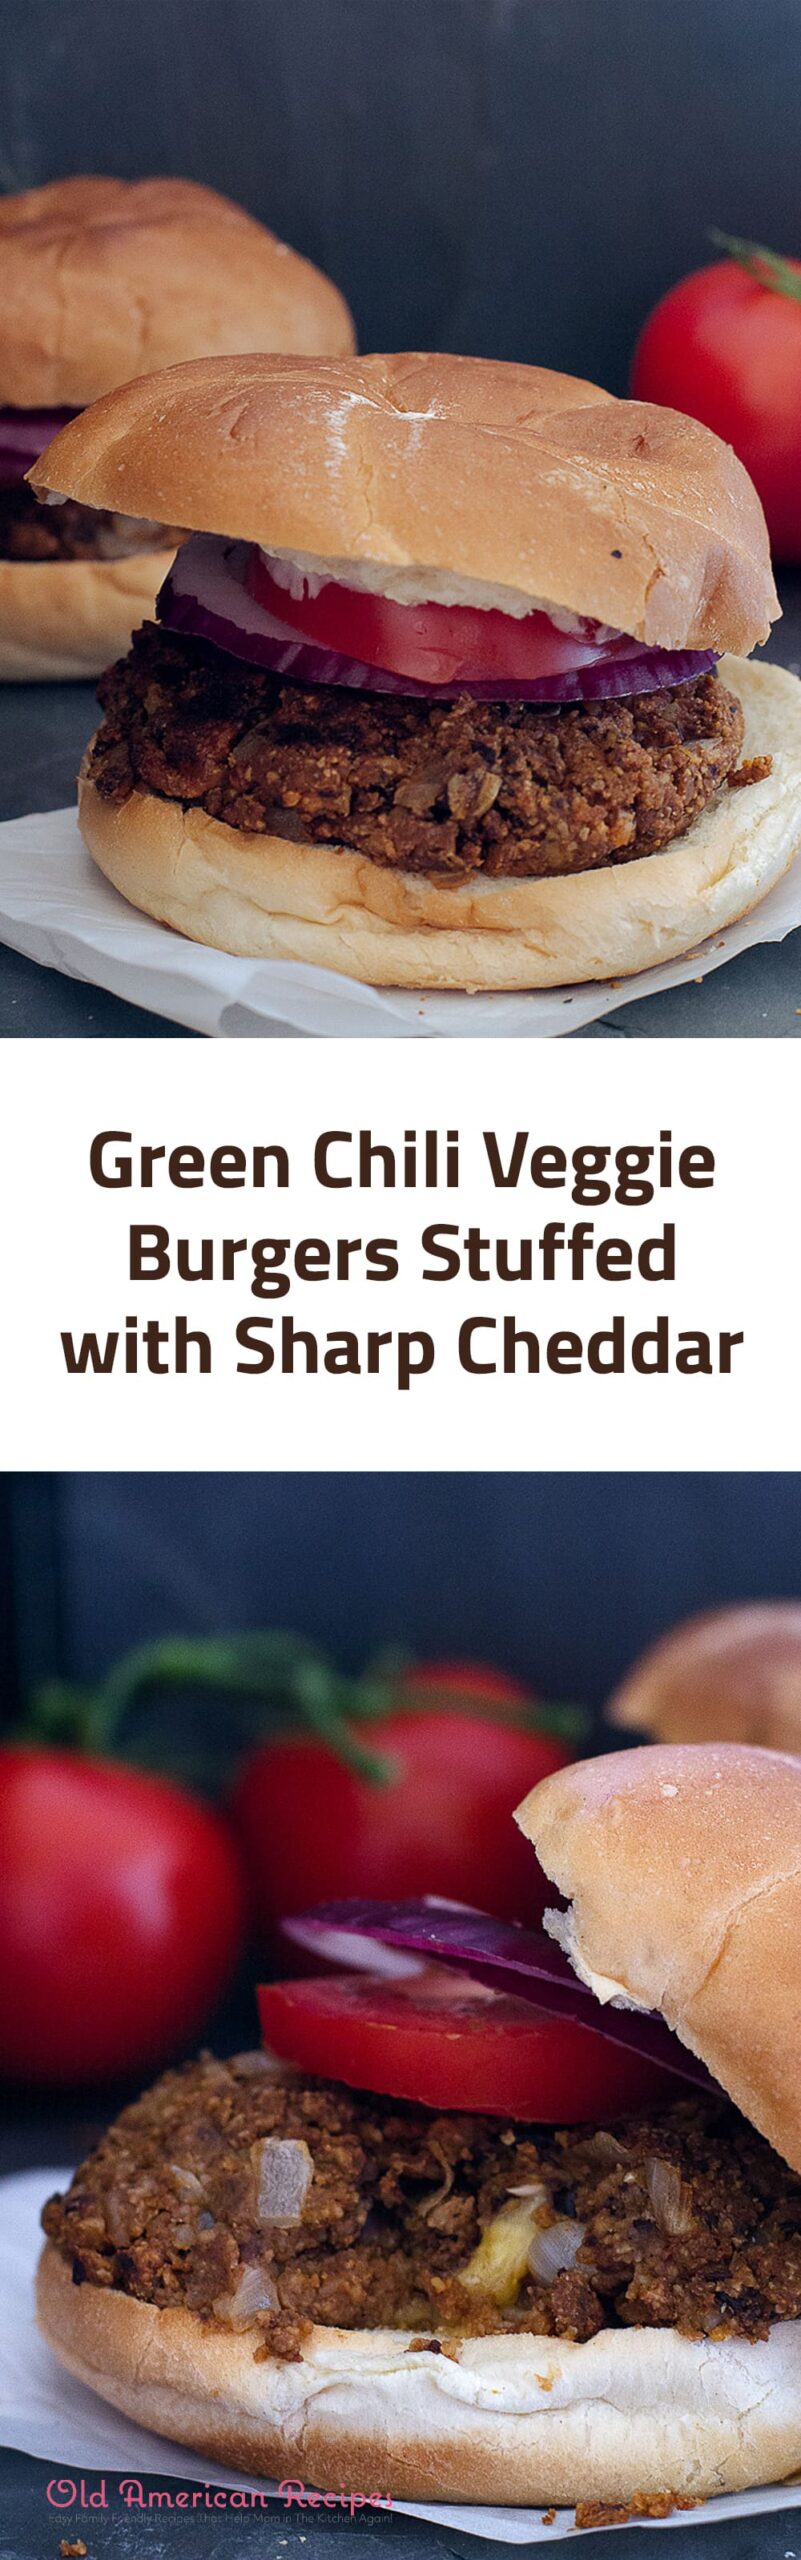 Green Chili Veggie Burgers Stuffed with Sharp Cheddar